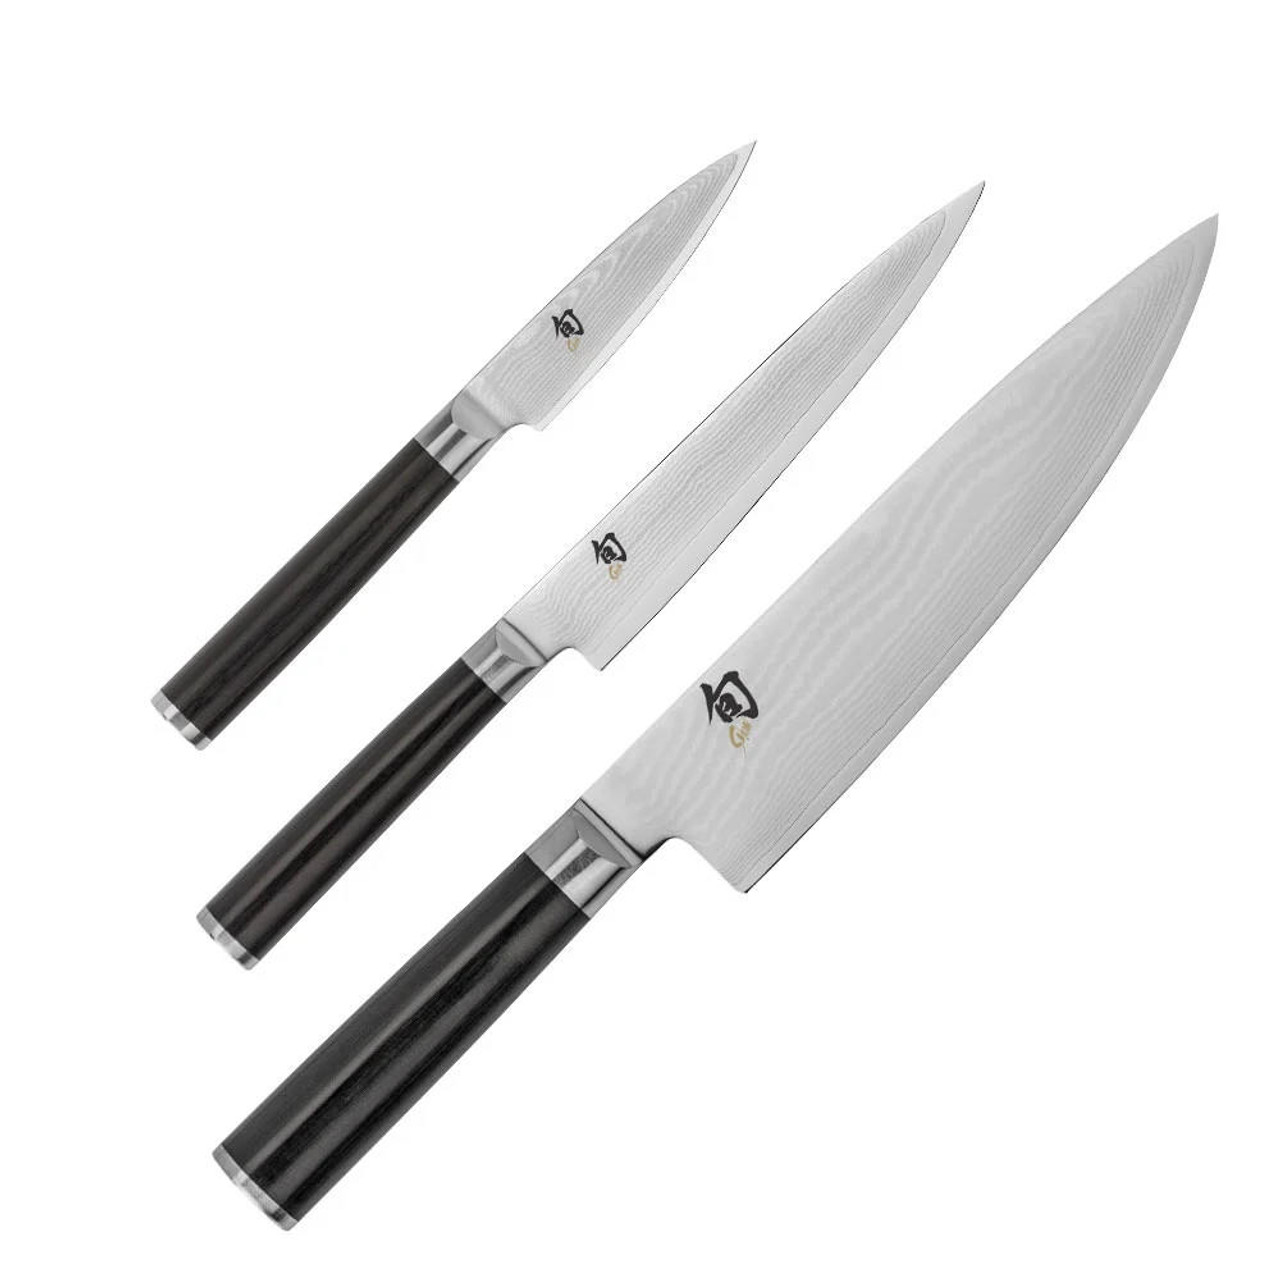  Shun Classics 3 Piece Starter Set - Chef's, Utility, & Paring Knives 